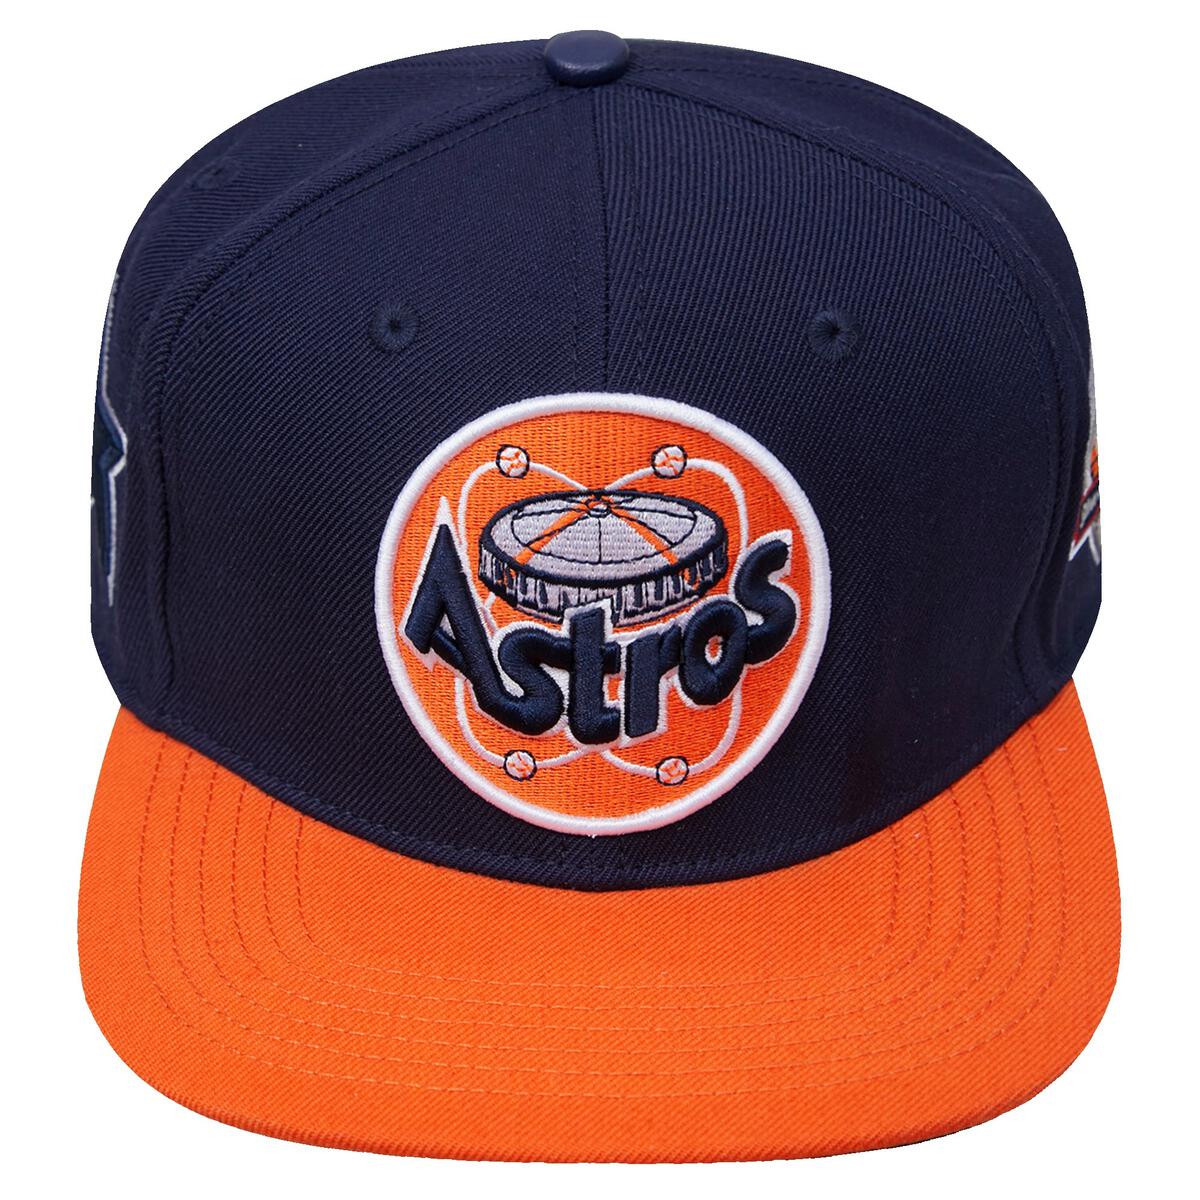 Vintage Baseball - Houston Astros (Orange Astros Wordmark)